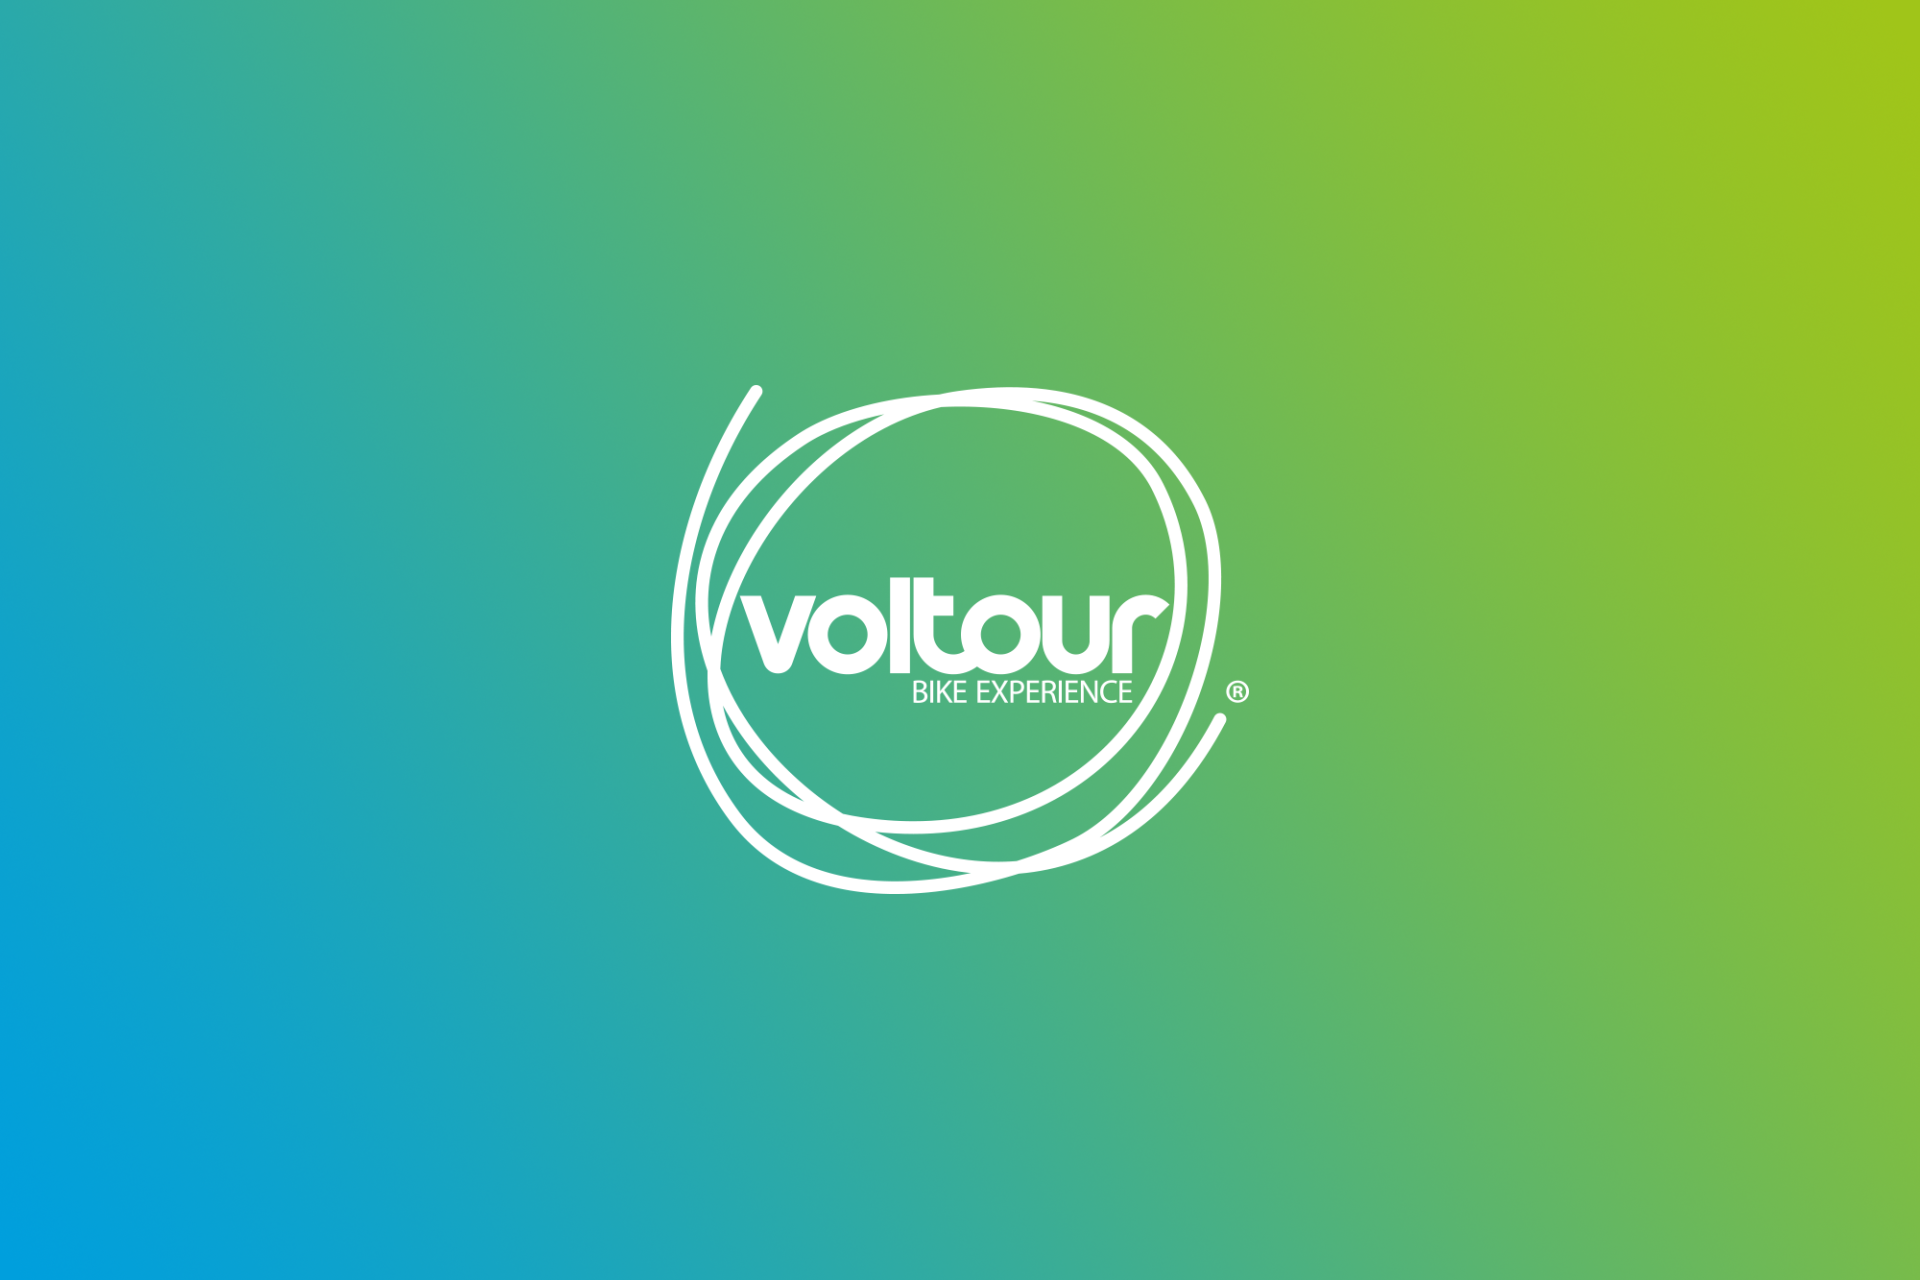 Voltour Bike Experience